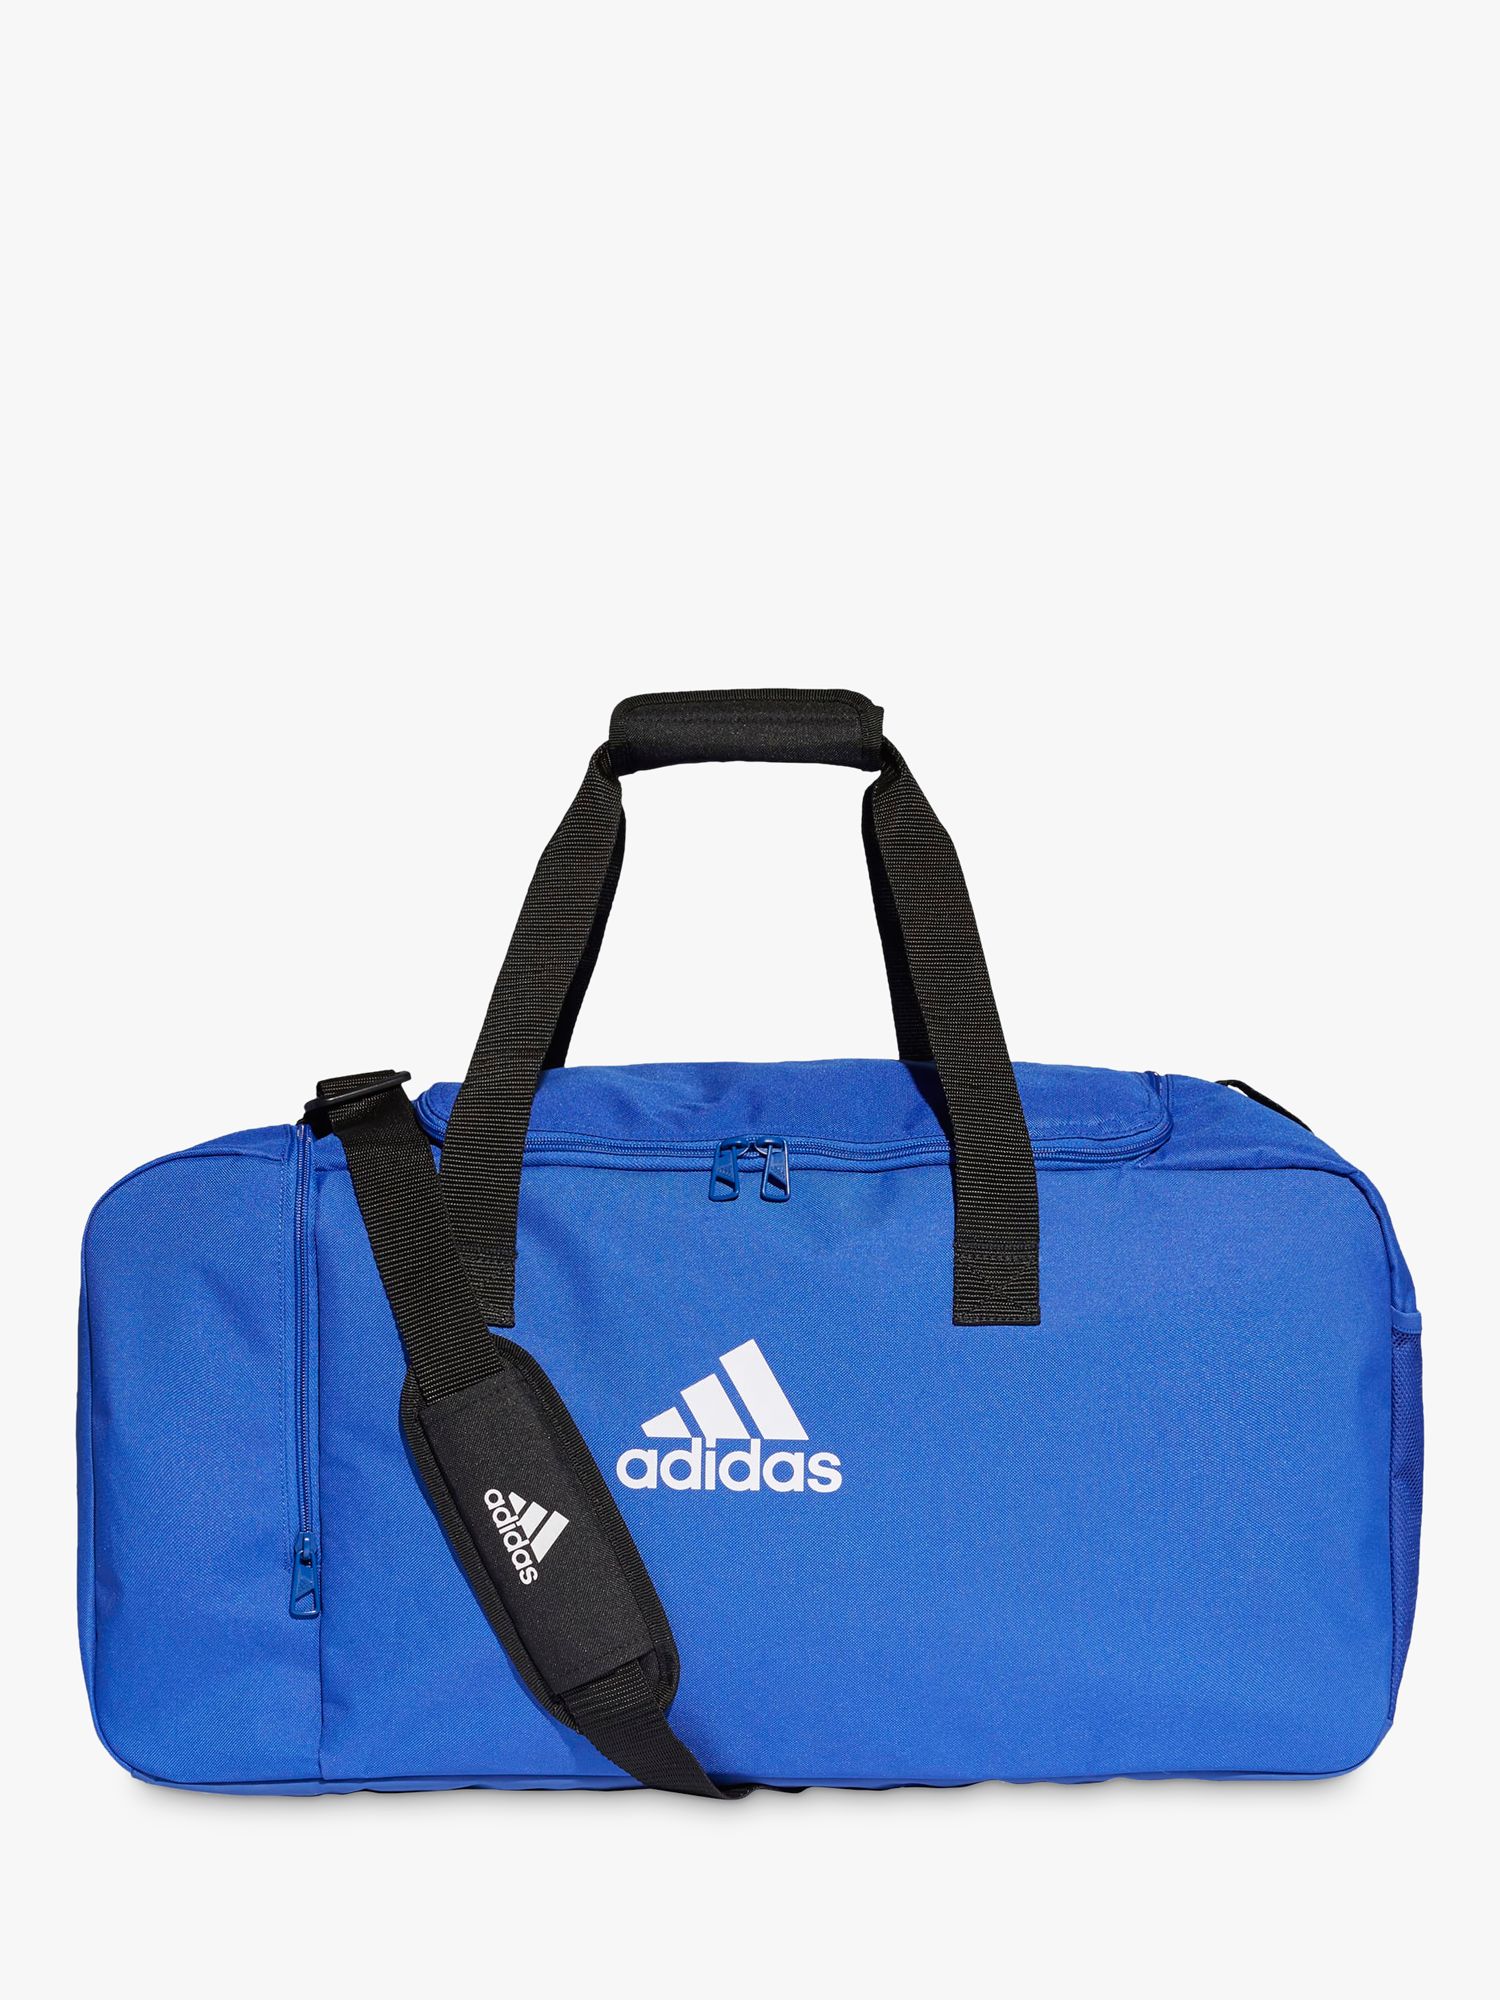 adidas Tiro Duffel Bag, Medium, Bold Blue/White